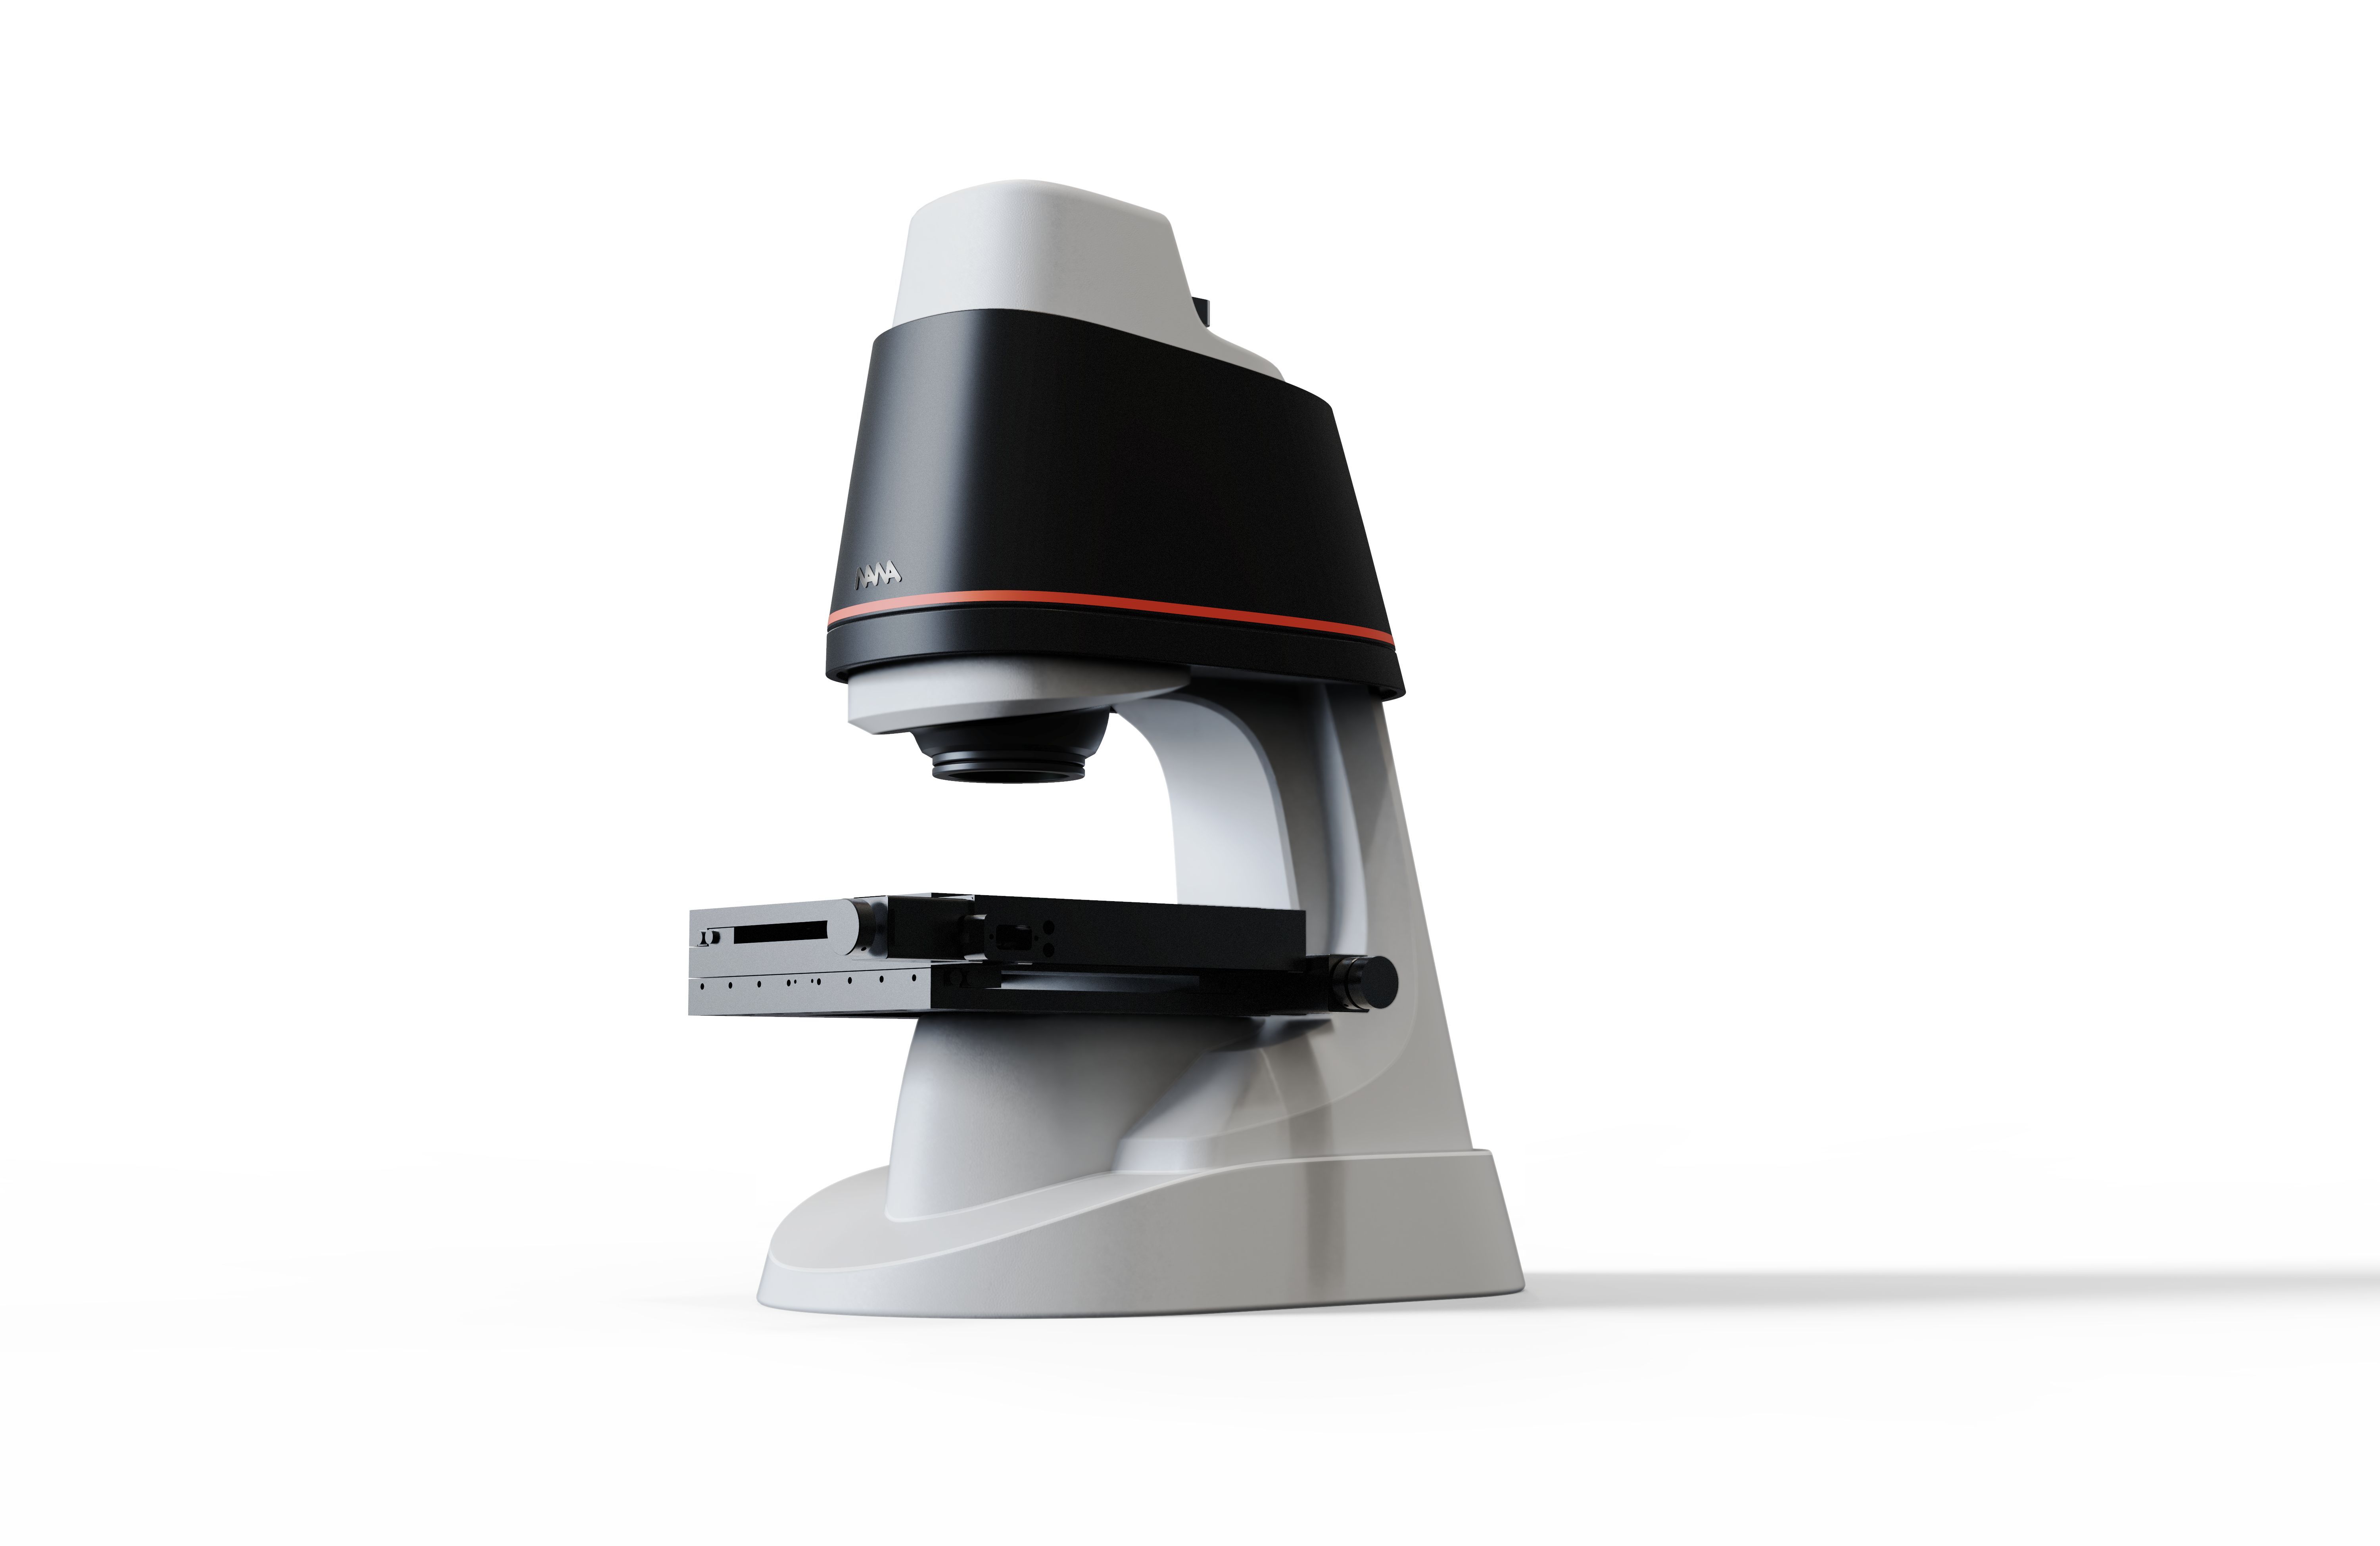 NANA 纳纳 光学数码显微镜 GR1000X